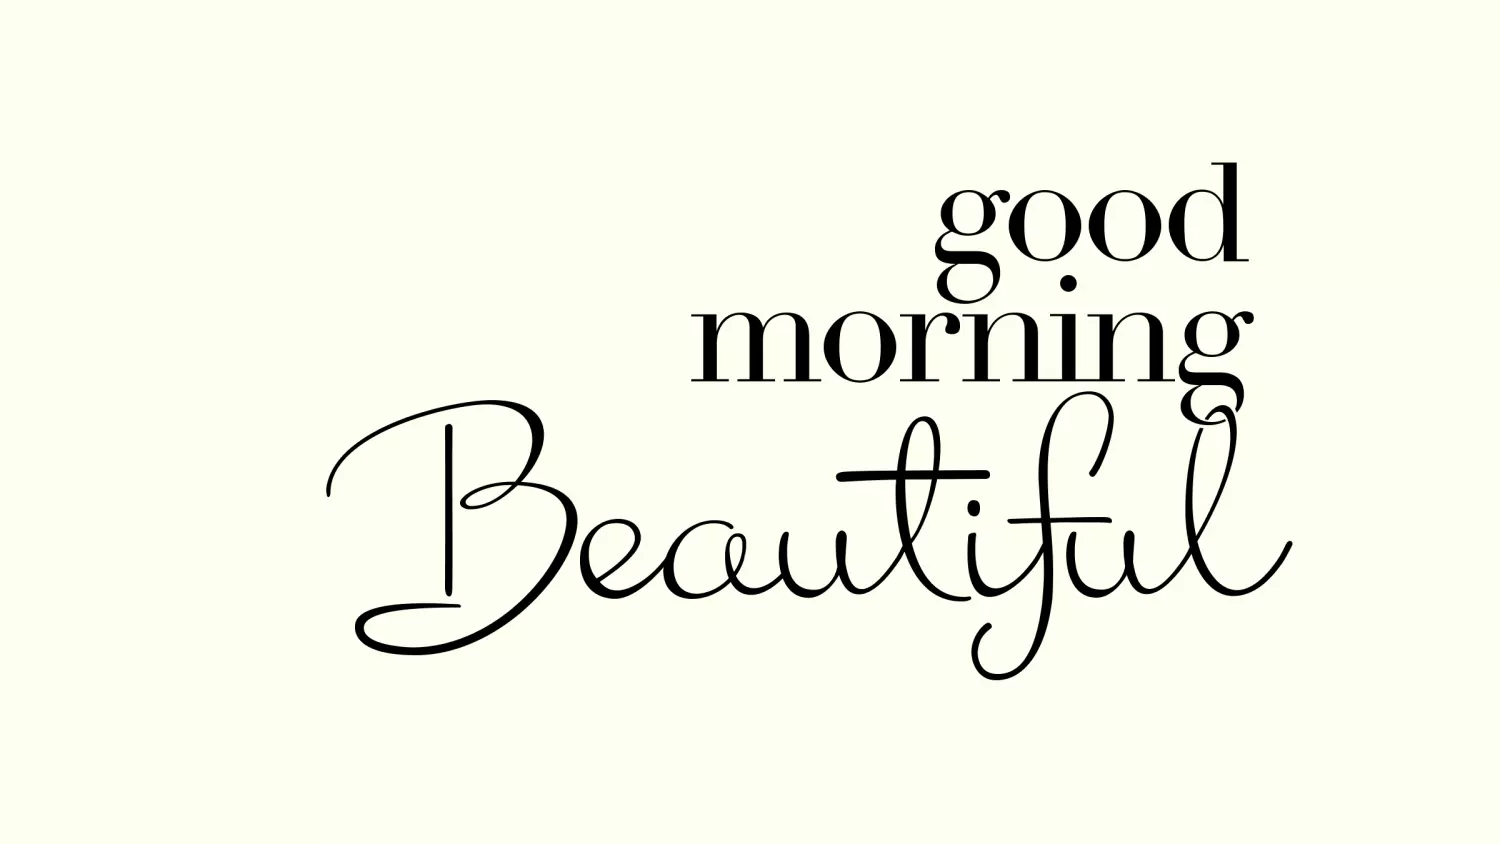 Good Morning Beautiful logo